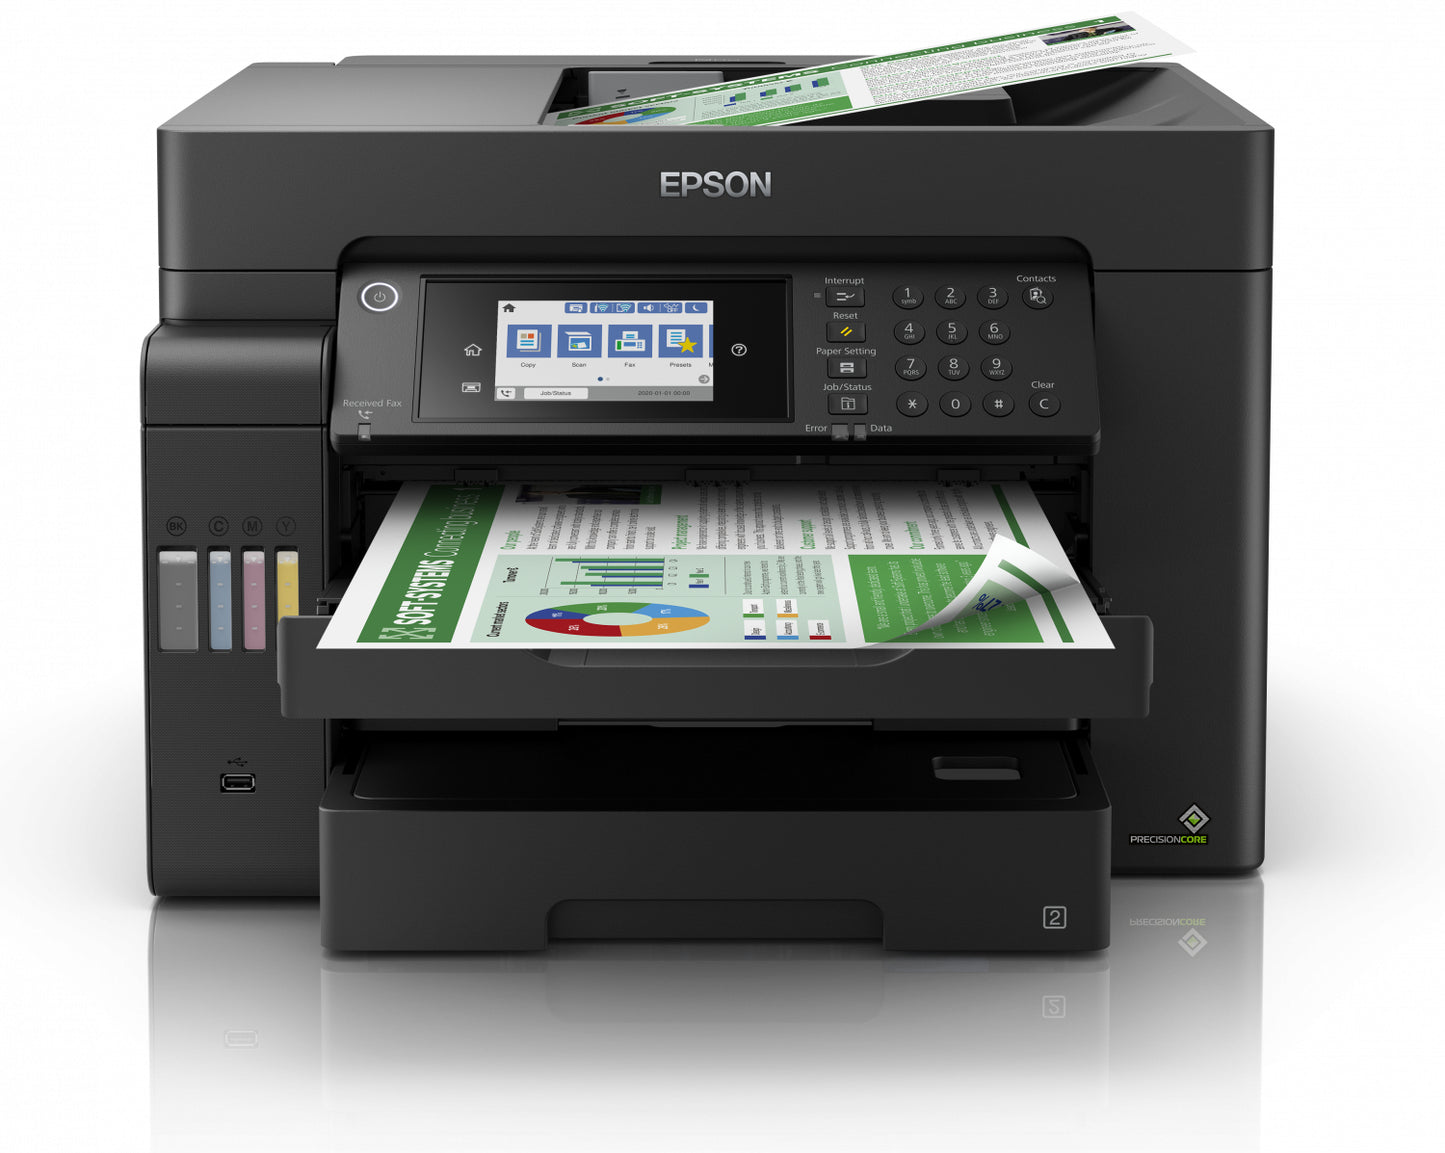 Impresora Epson Tinta Continua Multifuncional Color L15150 Tabloide WiFi Red Fax Duplex